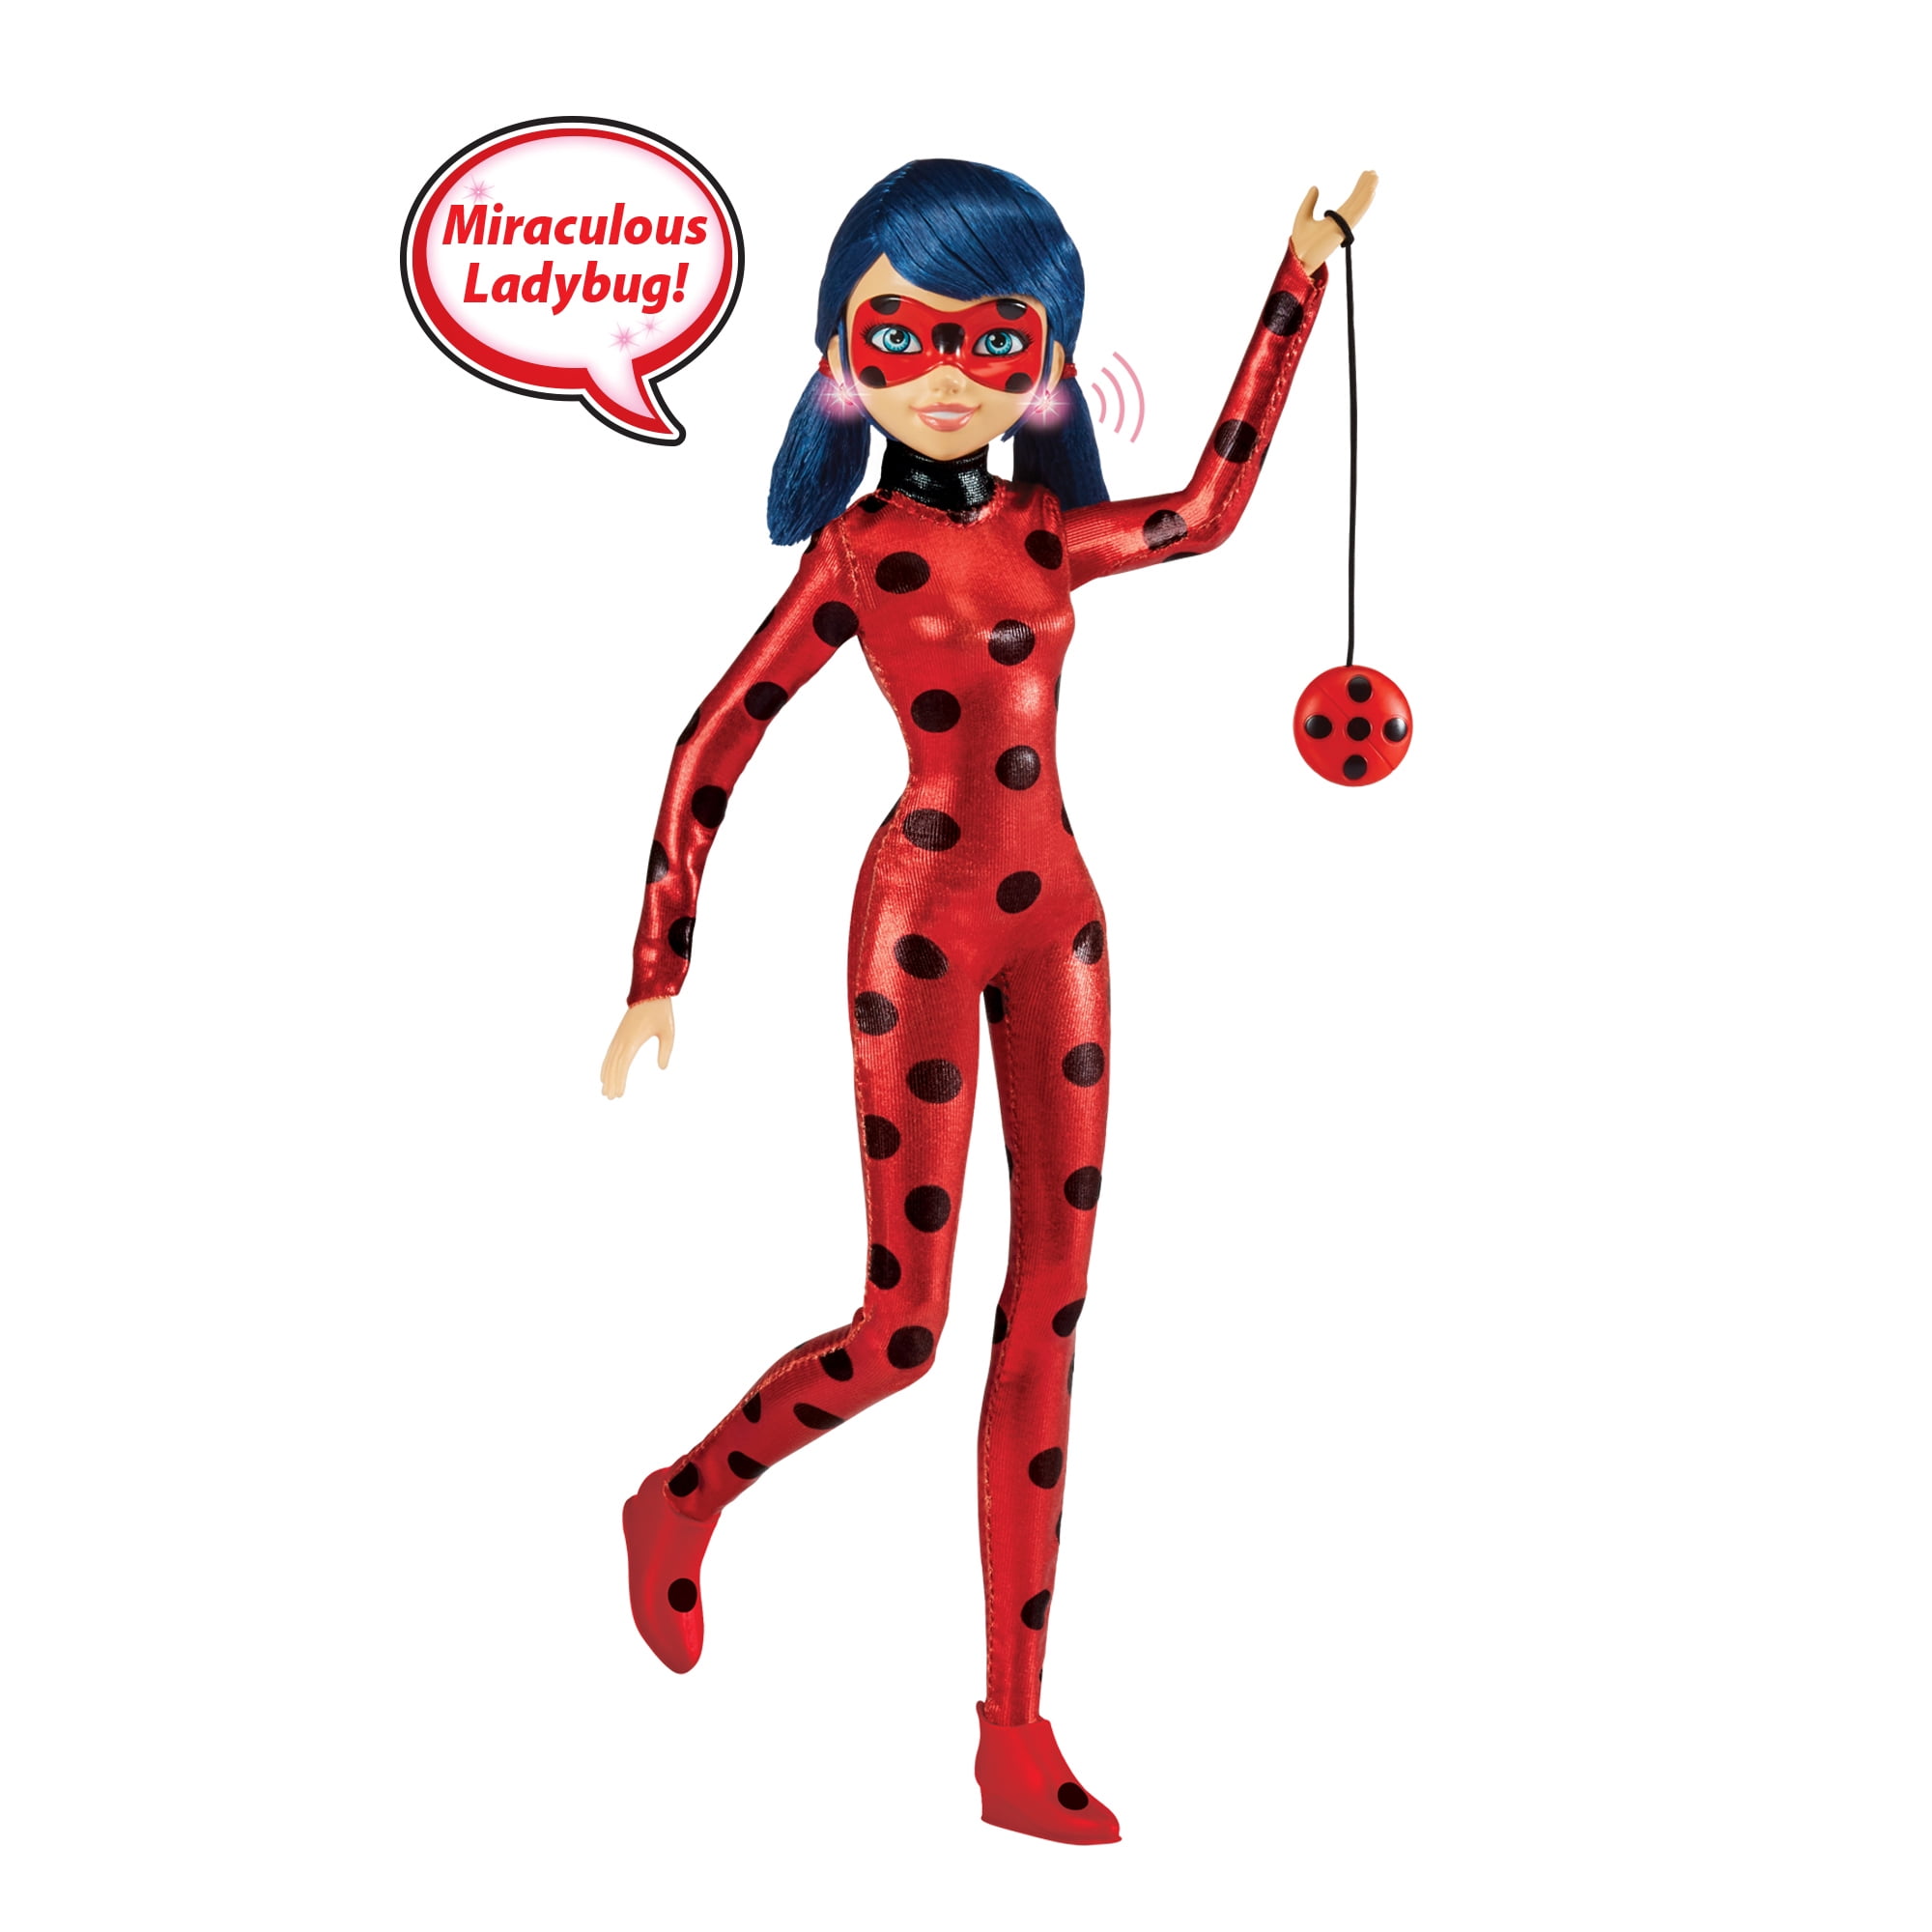  Miraculous Ladybug Doll